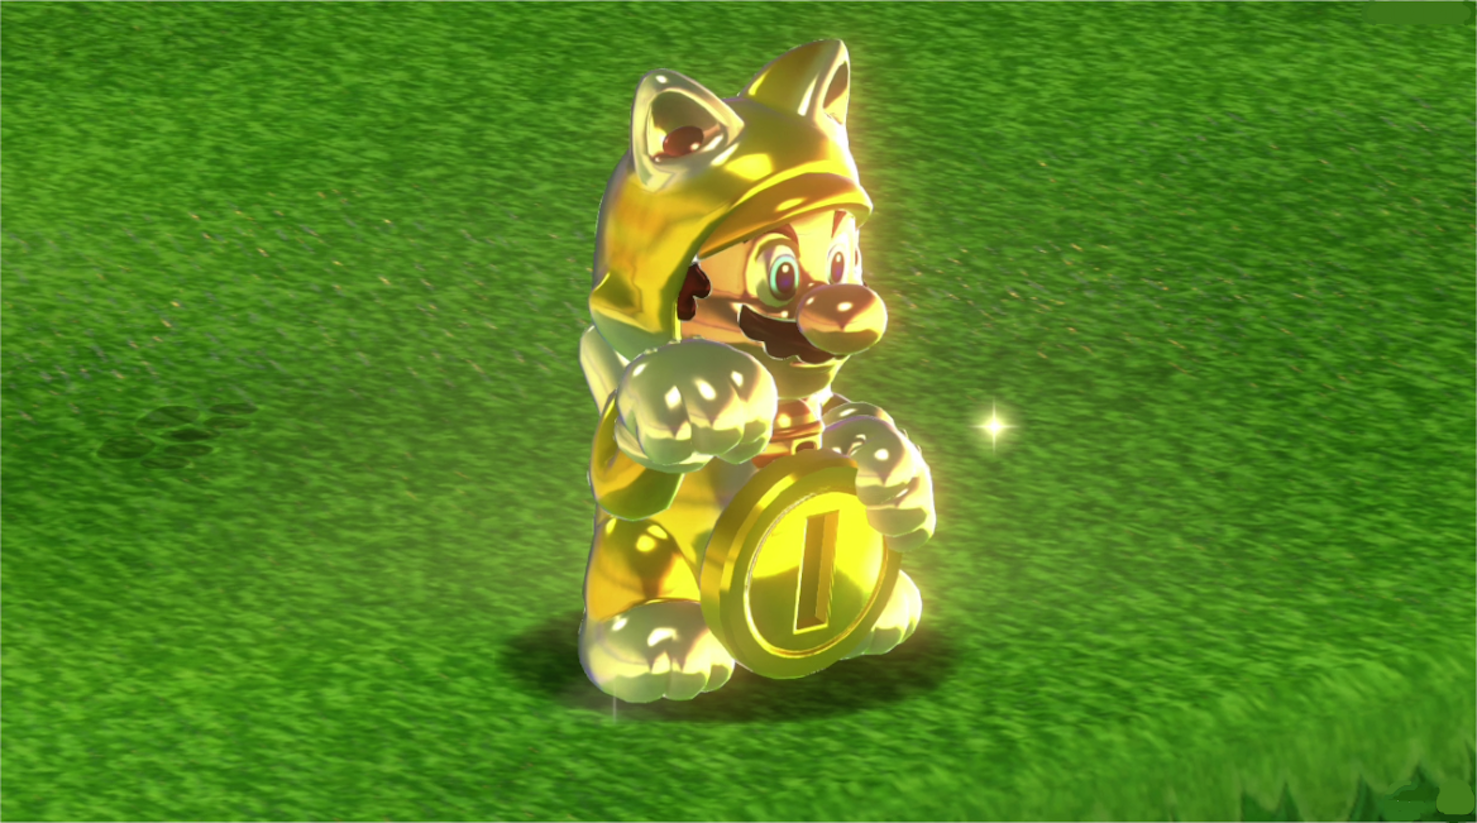 Cat Mario - Super Mario 3D World by Hakirya on DeviantArt